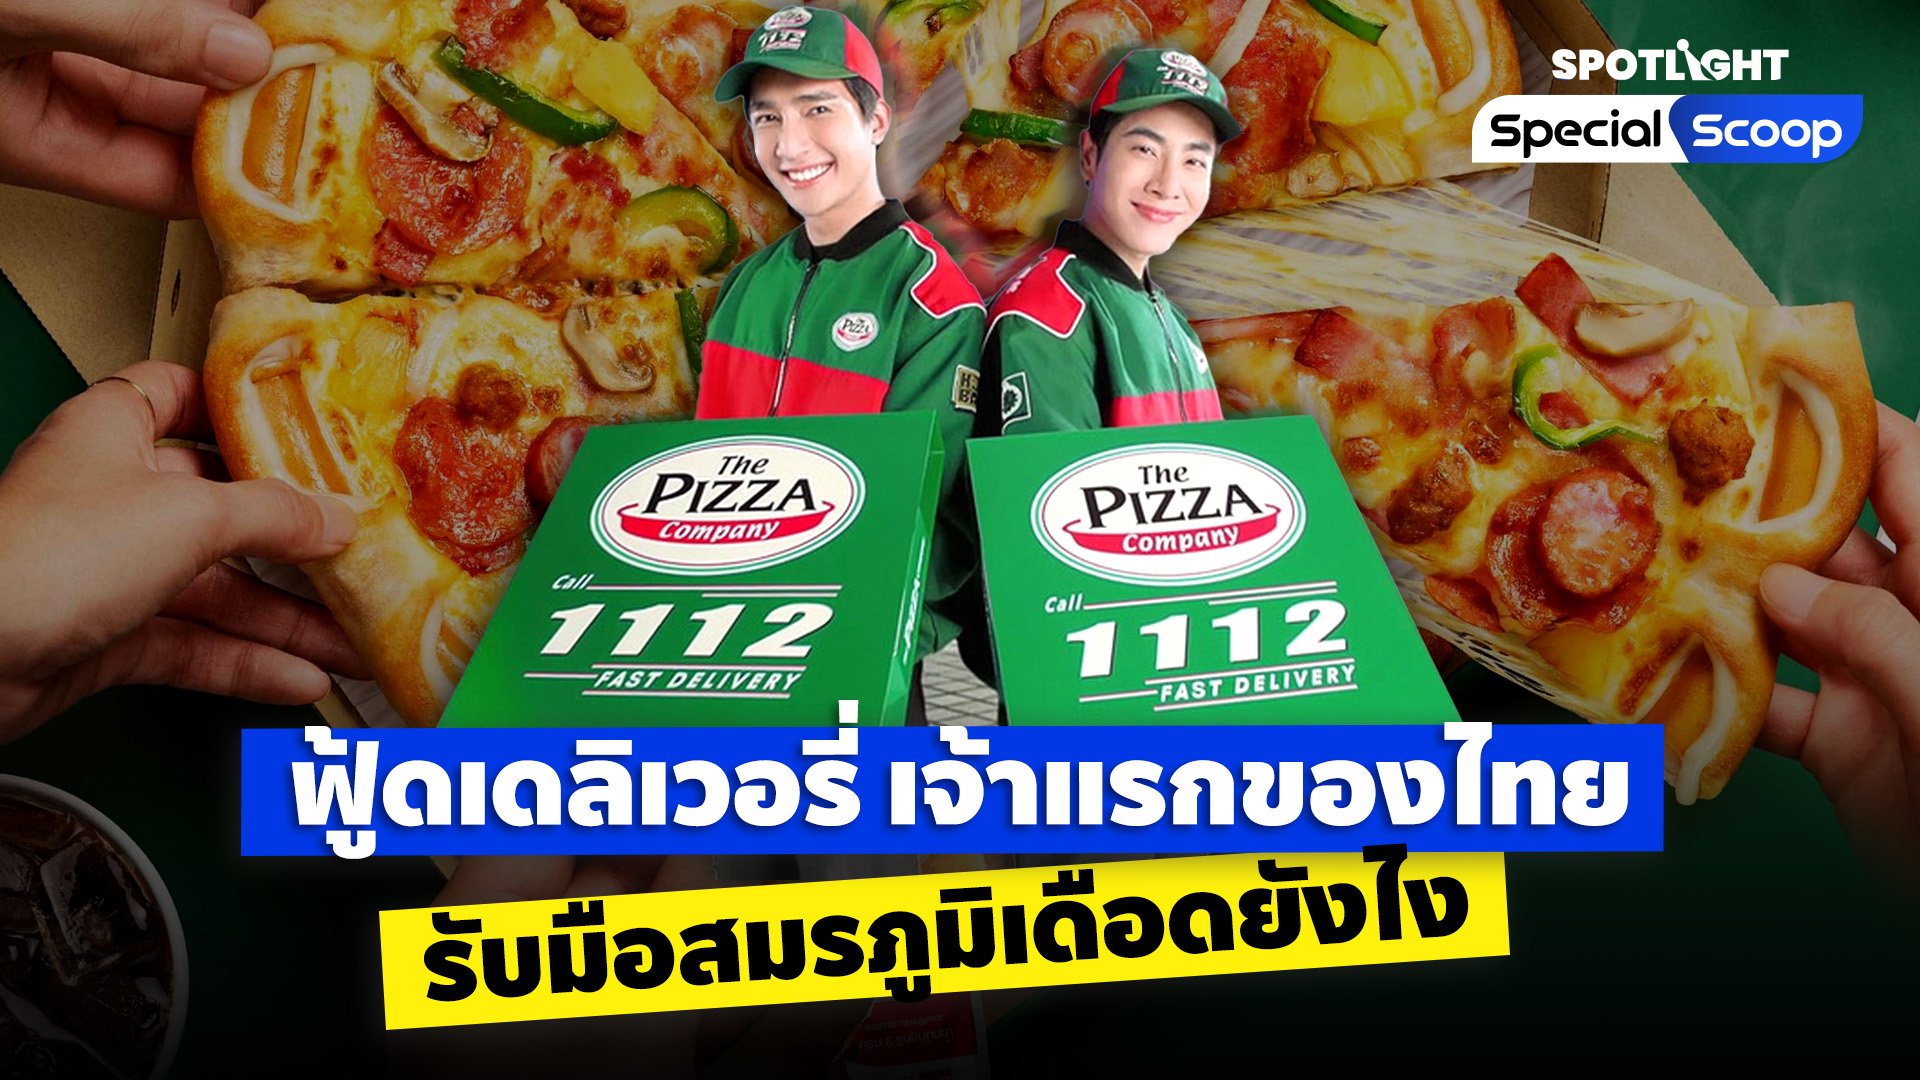 The Pizza Company ฟู้ดเดลิเวอรี่ เจ้าแรกของไทย รับมือสมรภูมิเดือดยังไง | Spotlight | 16 ธ.ค. 65 | AMARIN TVHD34